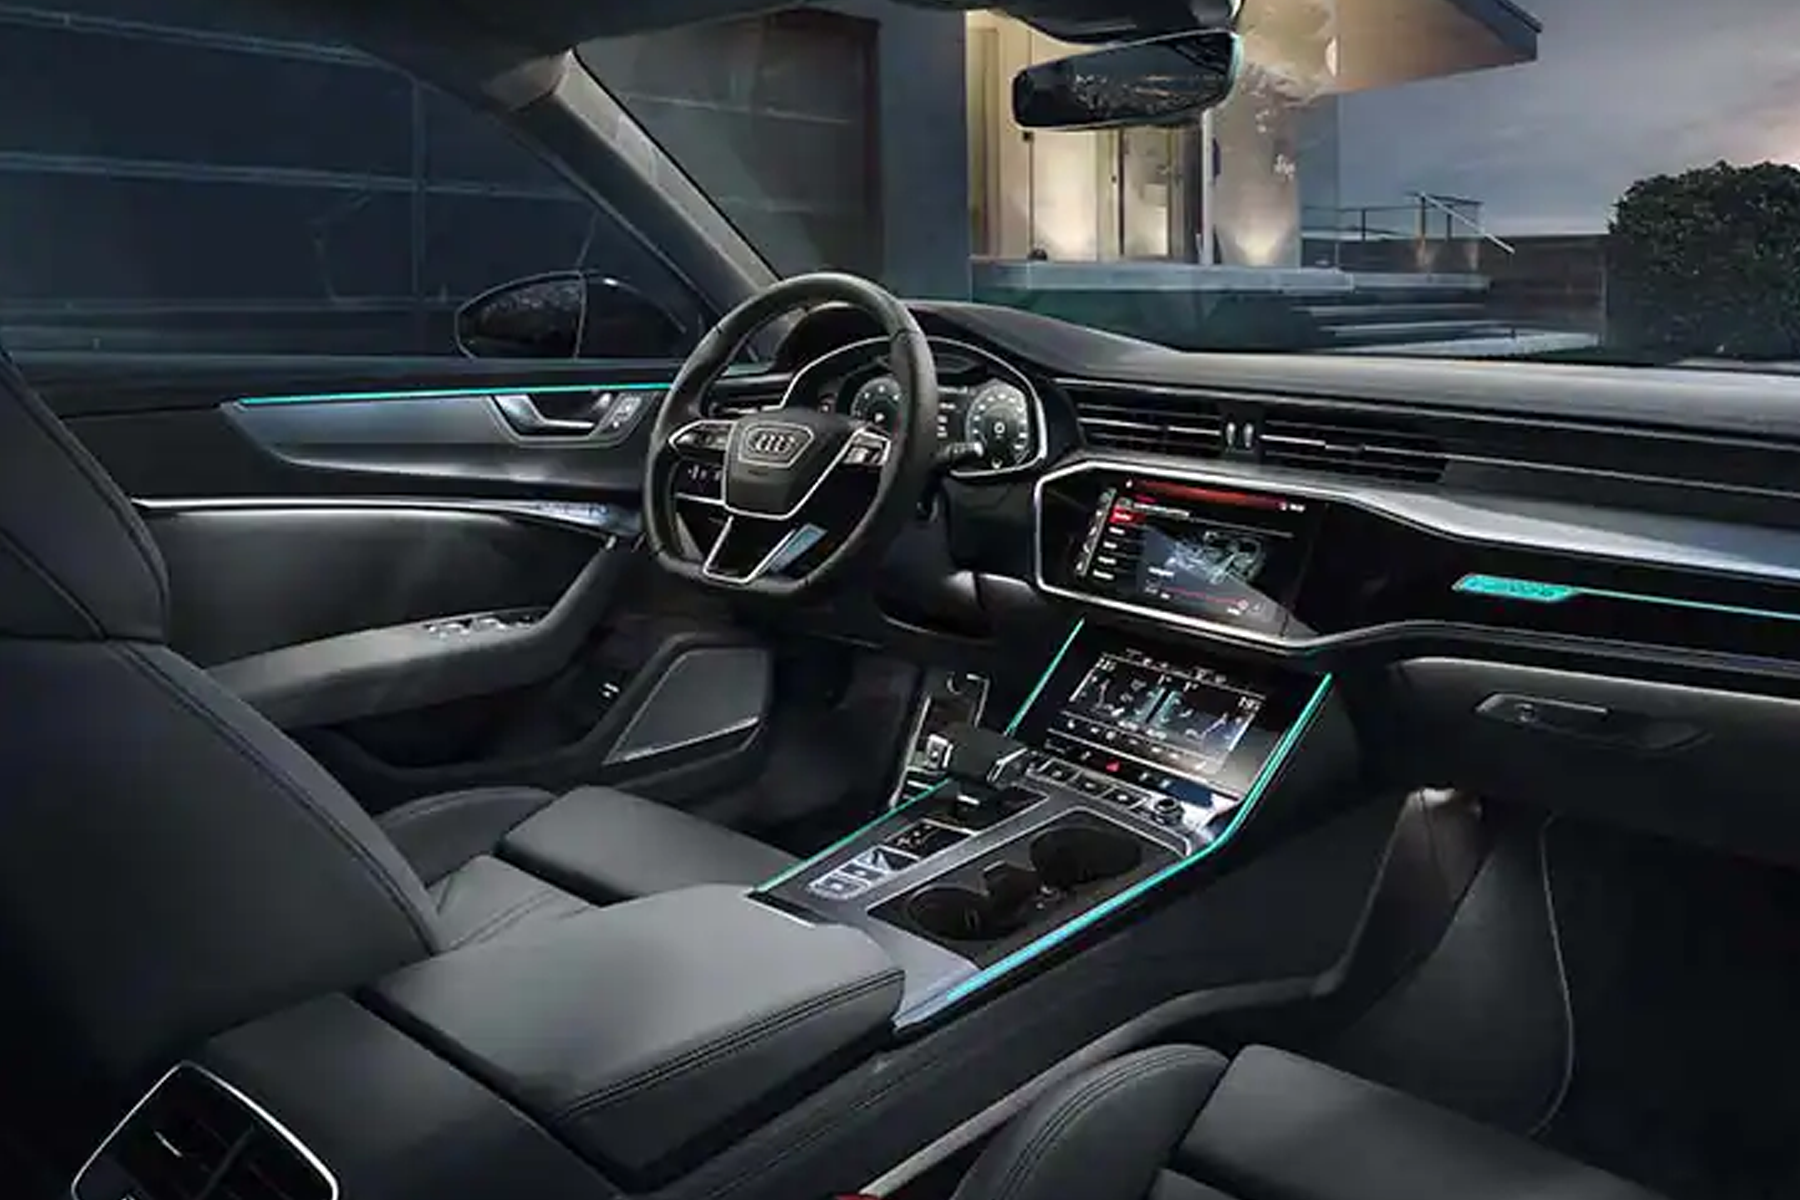 Audi A6 Avant interior dashboard